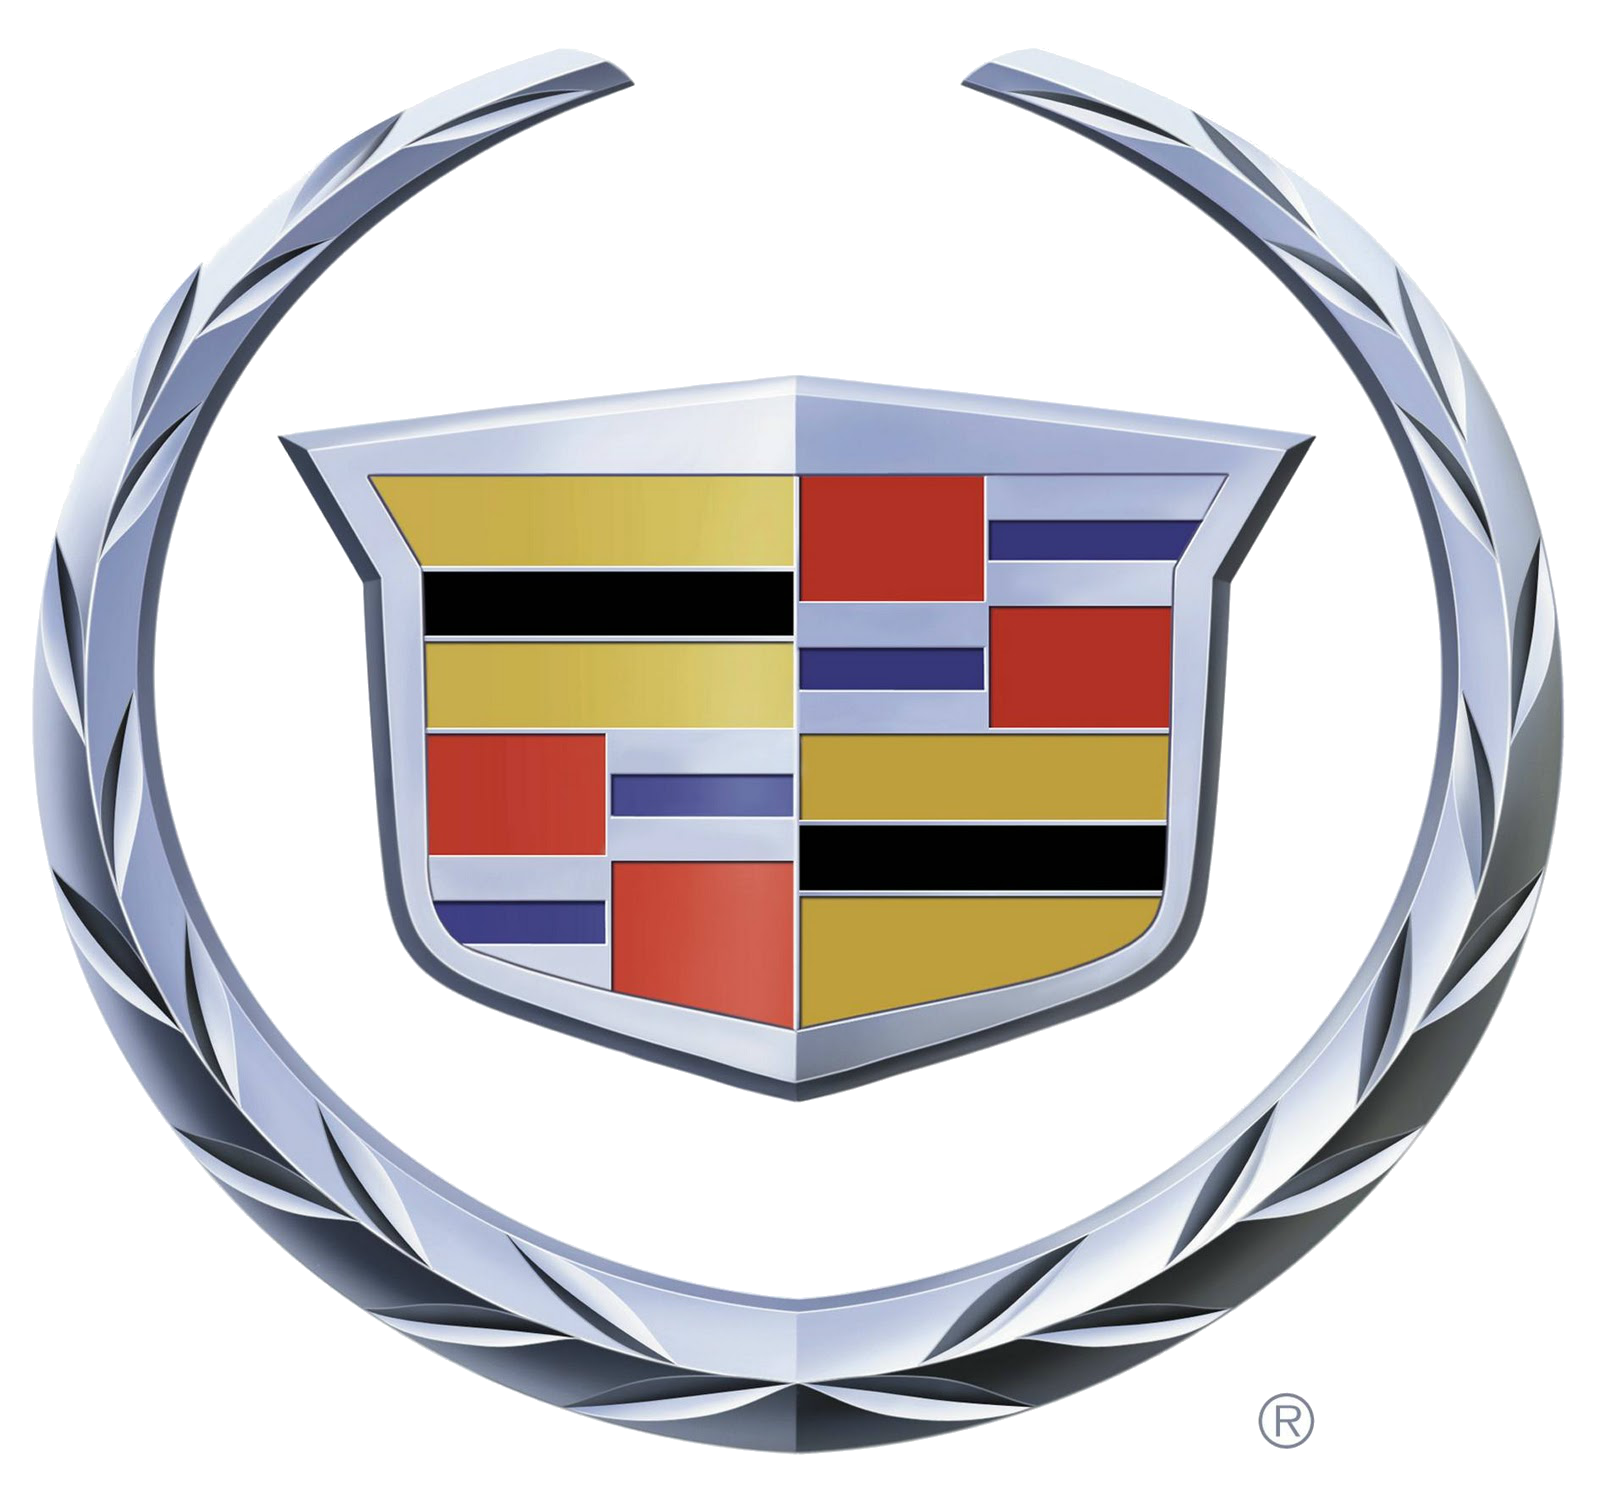 9 - Cadillac logo with Nannar's Moon Crescent symbol